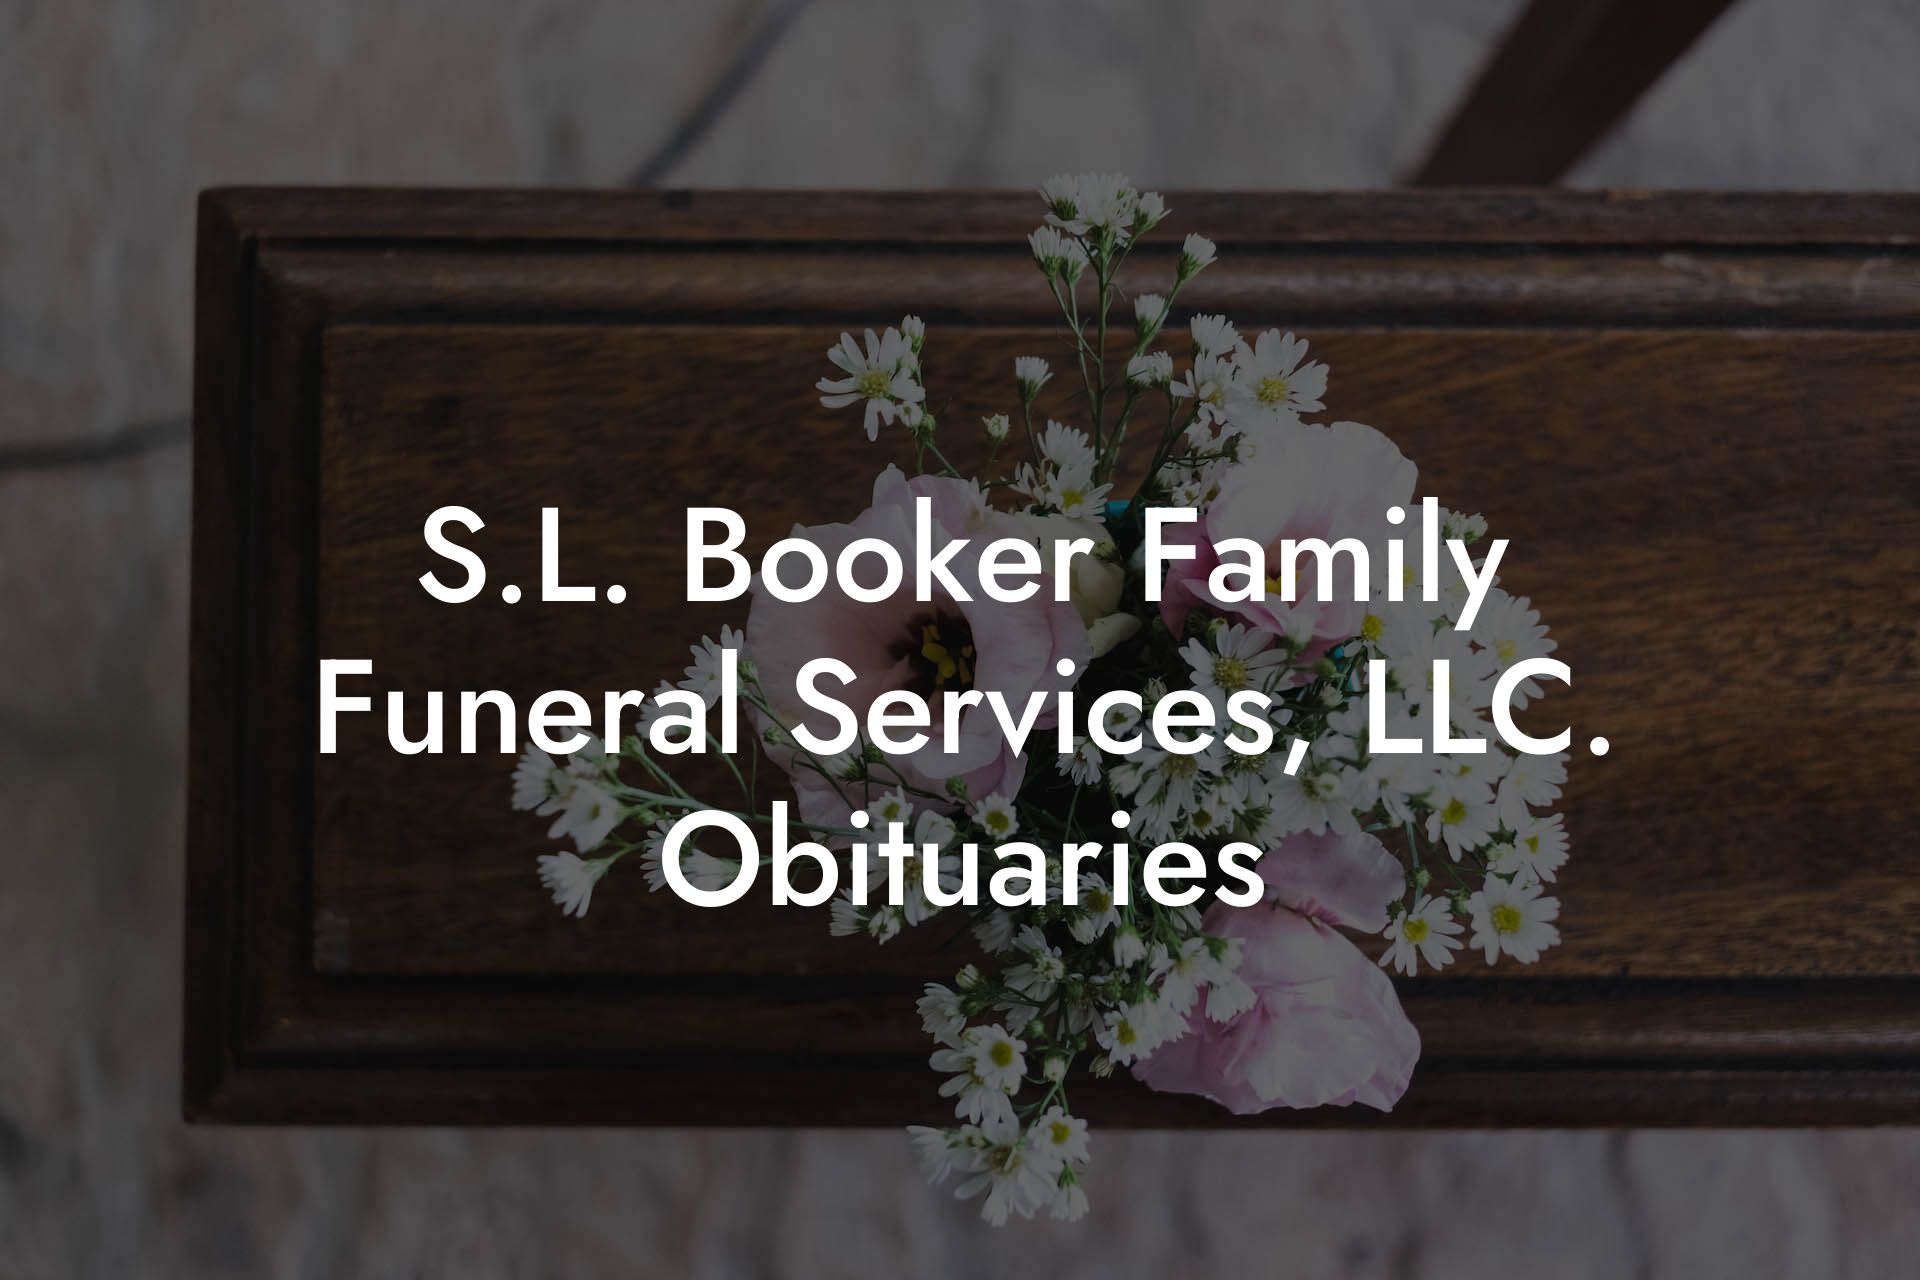 S.L. Booker Family Funeral Services, LLC. Obituaries